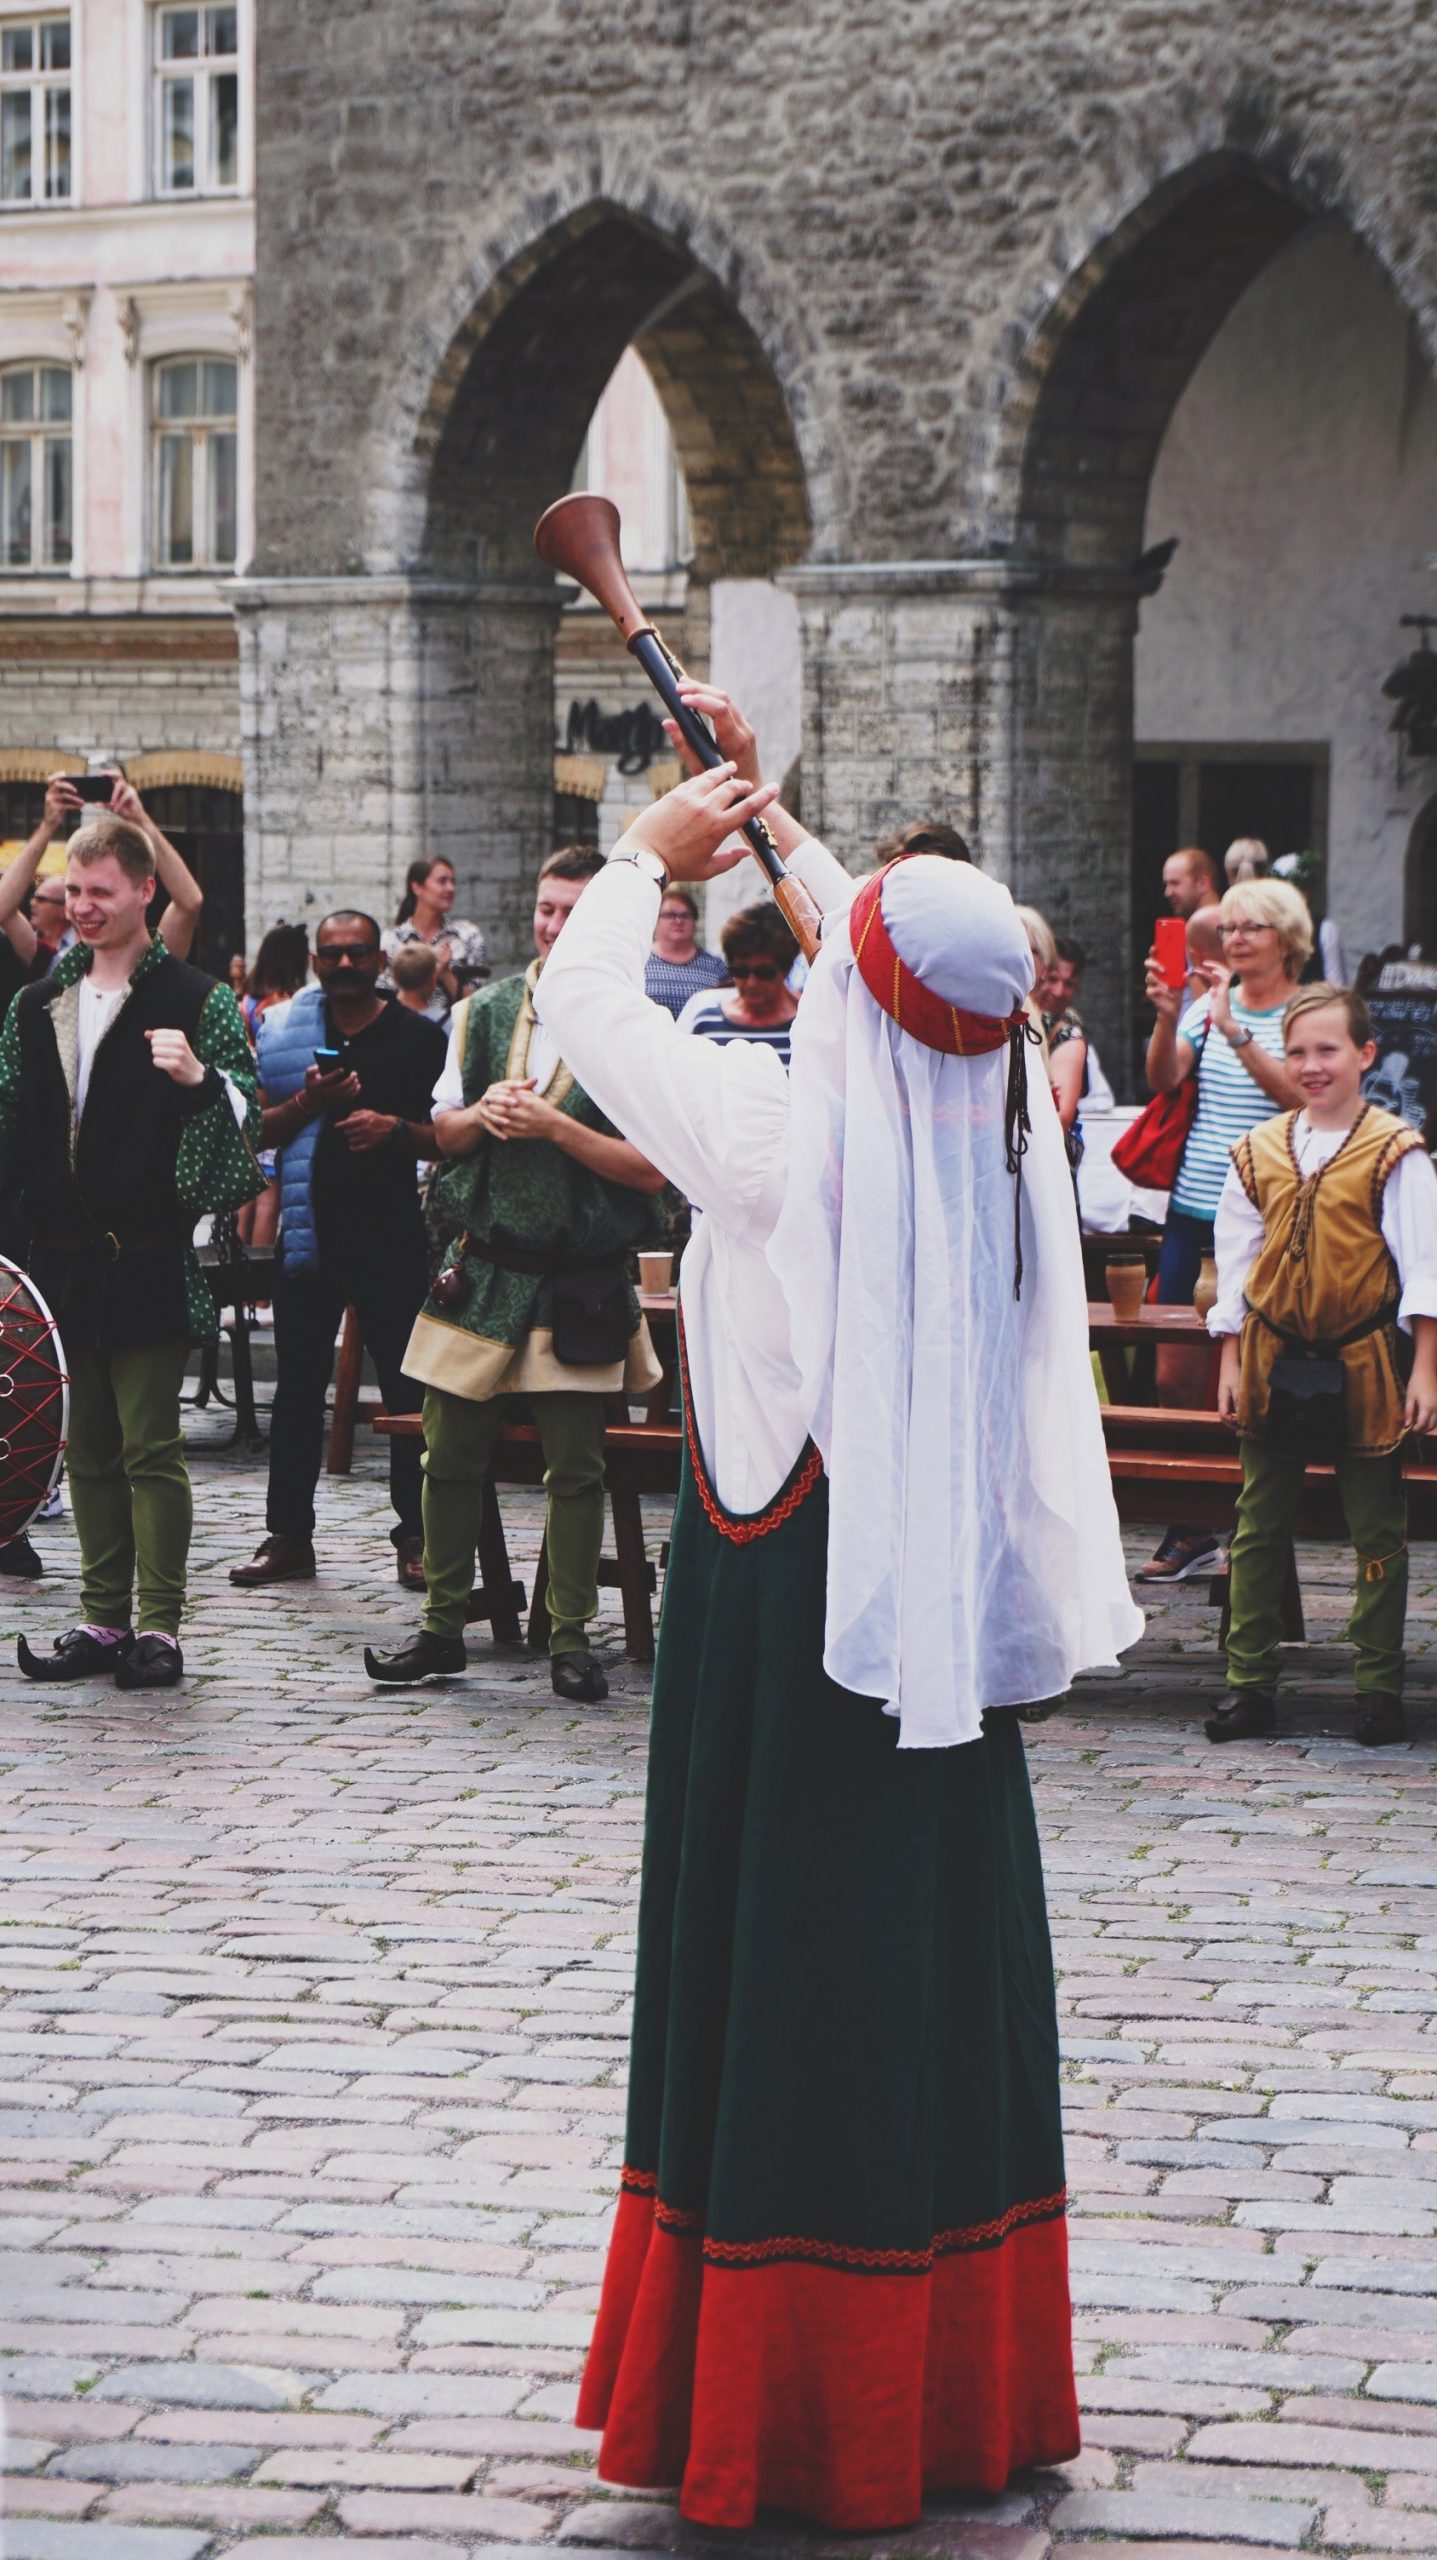 Medieval Announcement - Old Town of Tallinn, Estonia